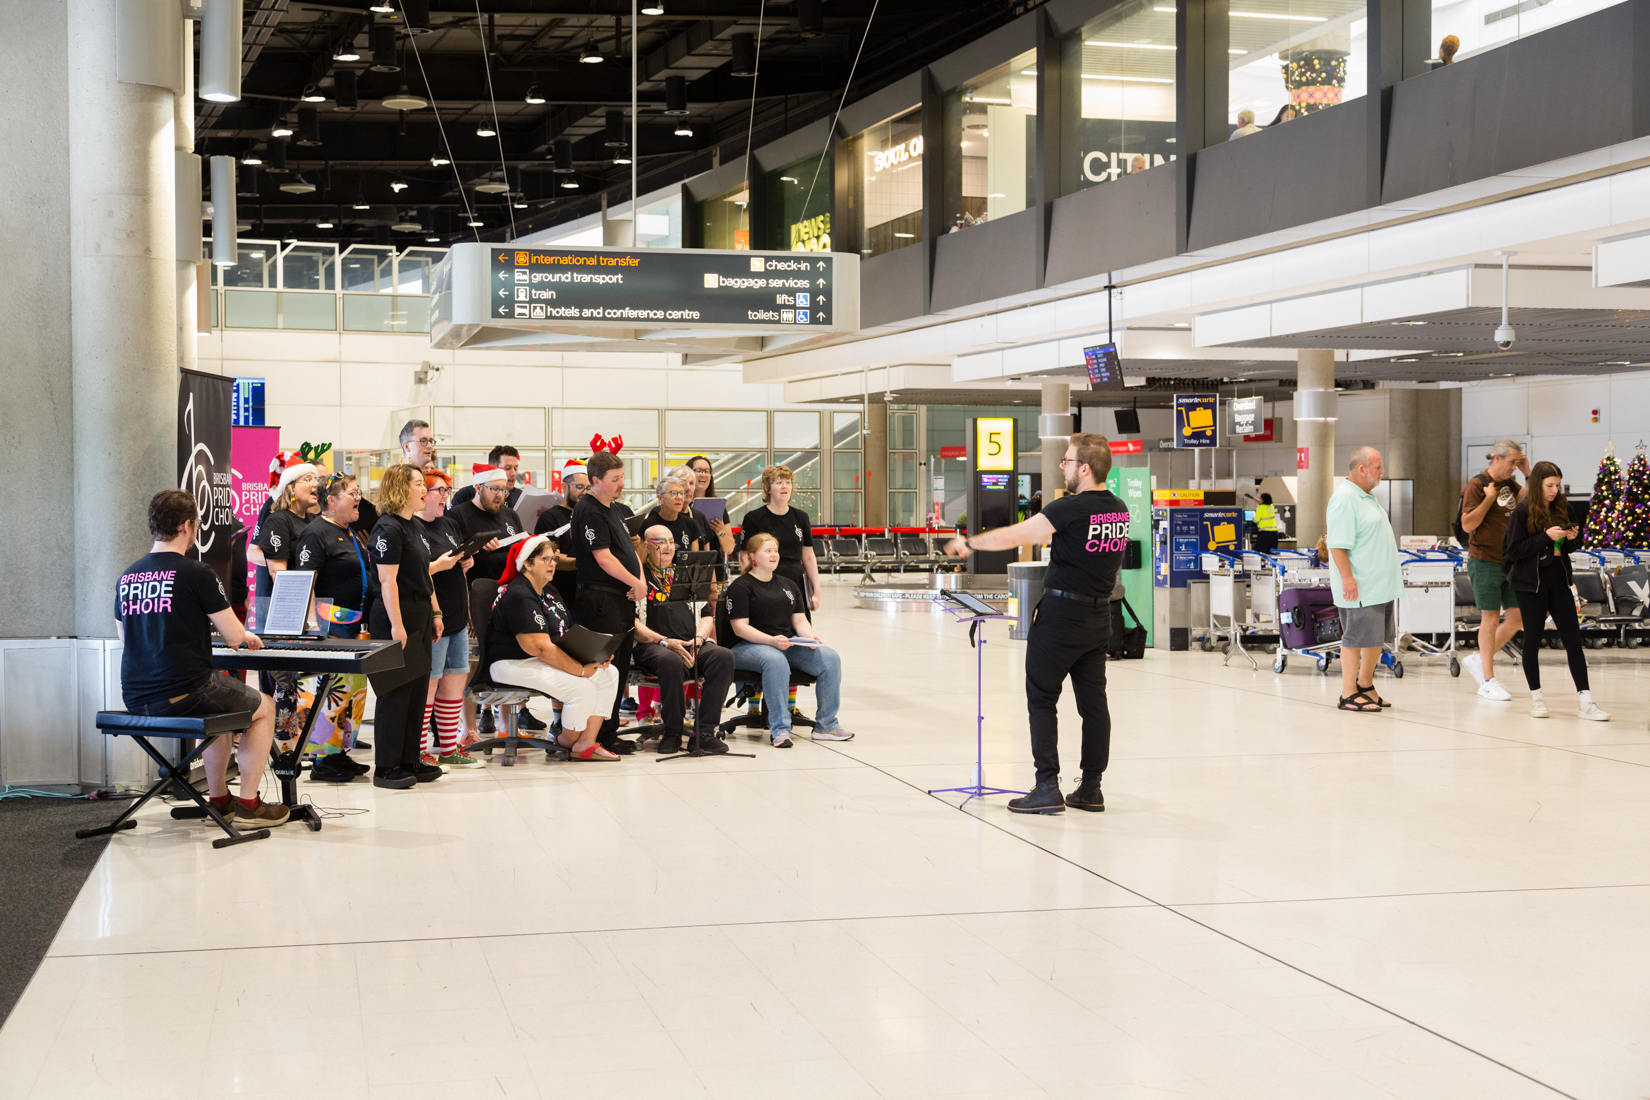 Brisbane Pride Choir performing inside the Brisbane Domestic Terminal with passengers watching them